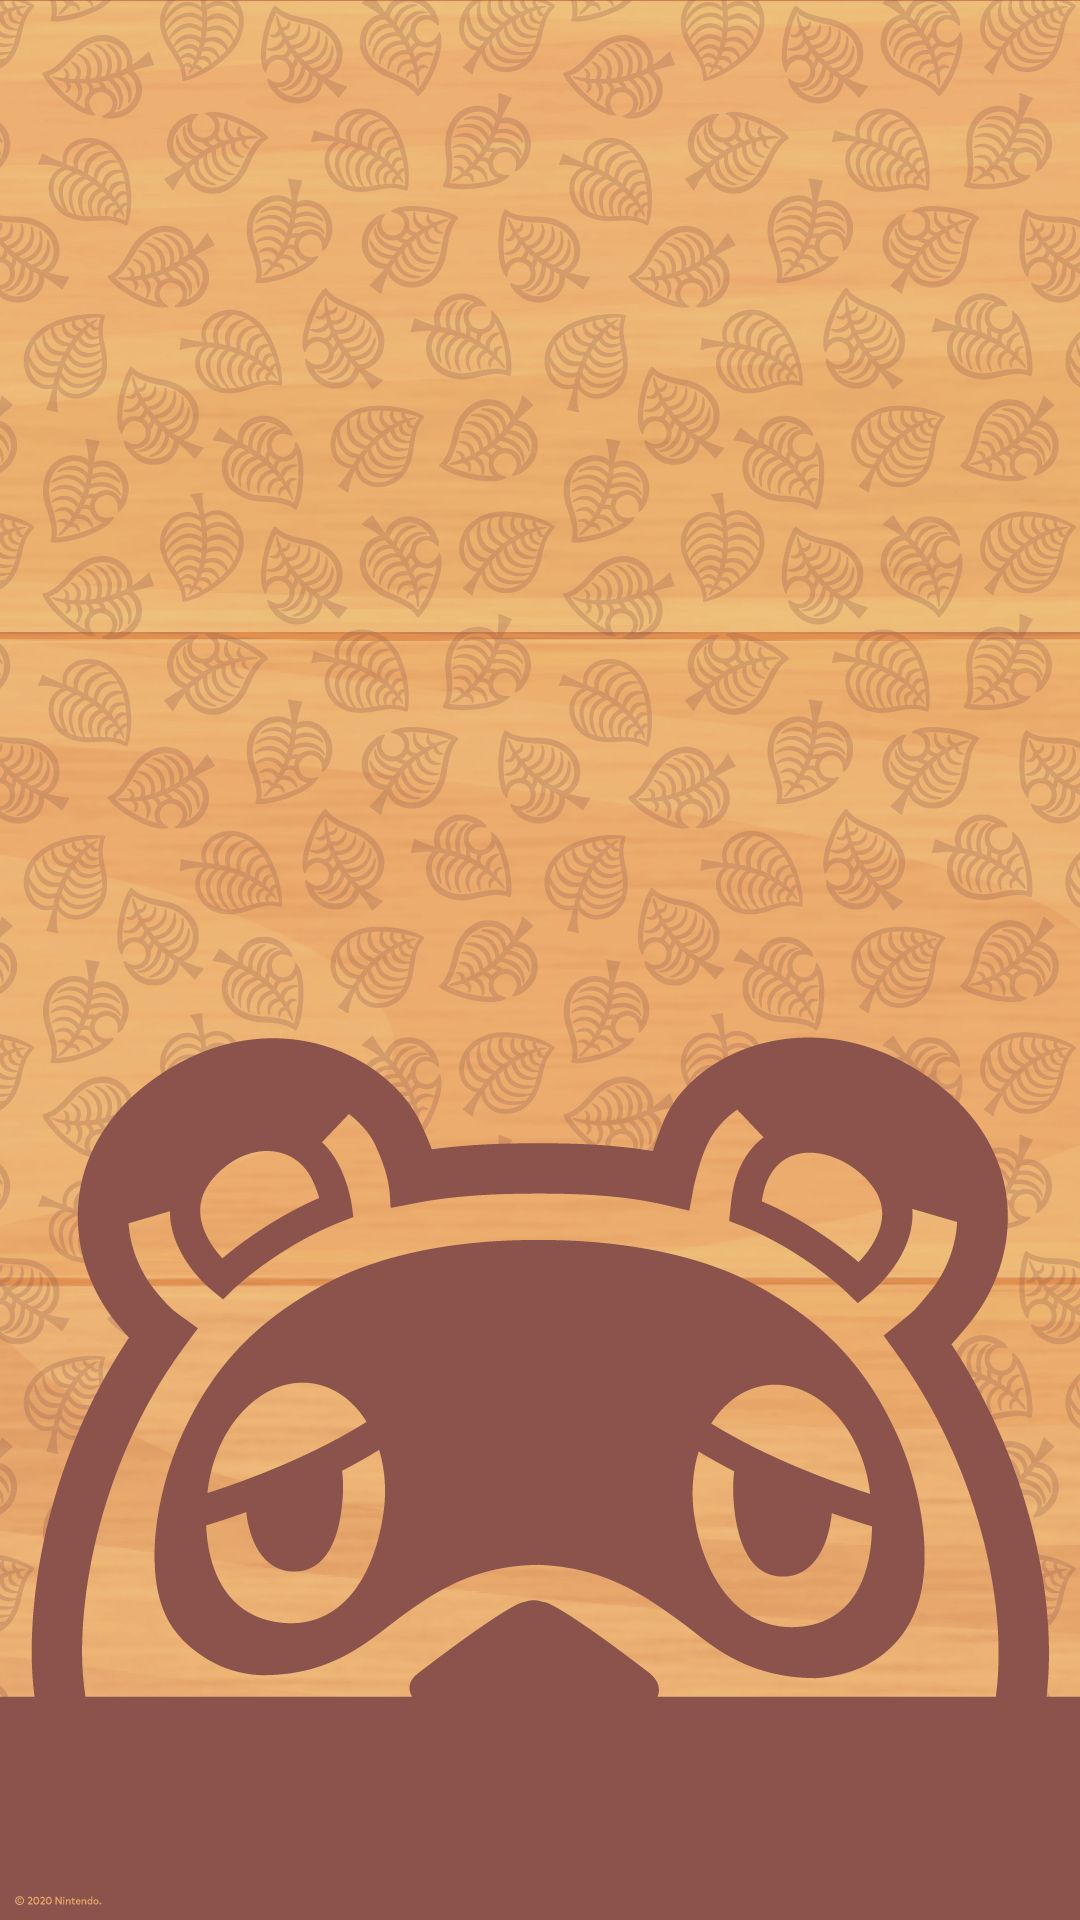 Animal Crossing iPhone Wallpapers - Wallpaper Cave